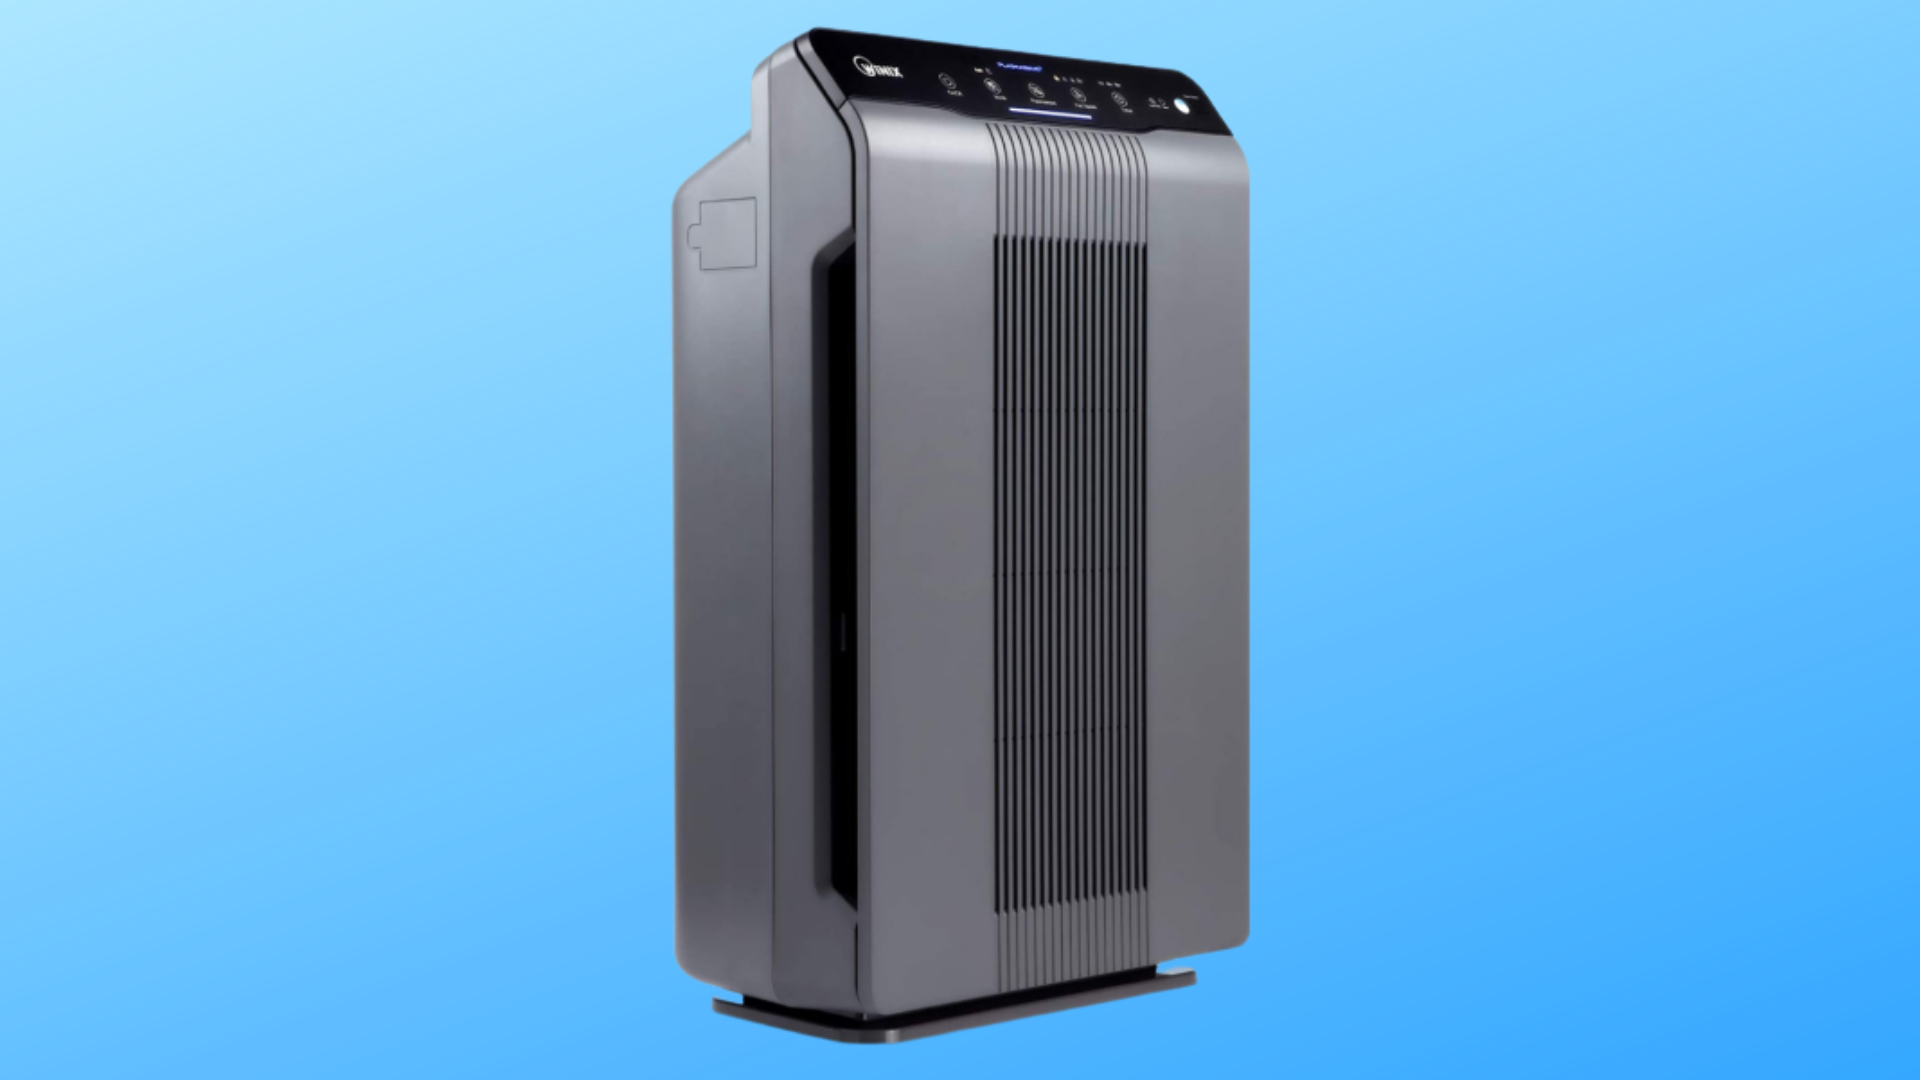 best air purifiers Winix 5300-2 Air Purifier best air purifier